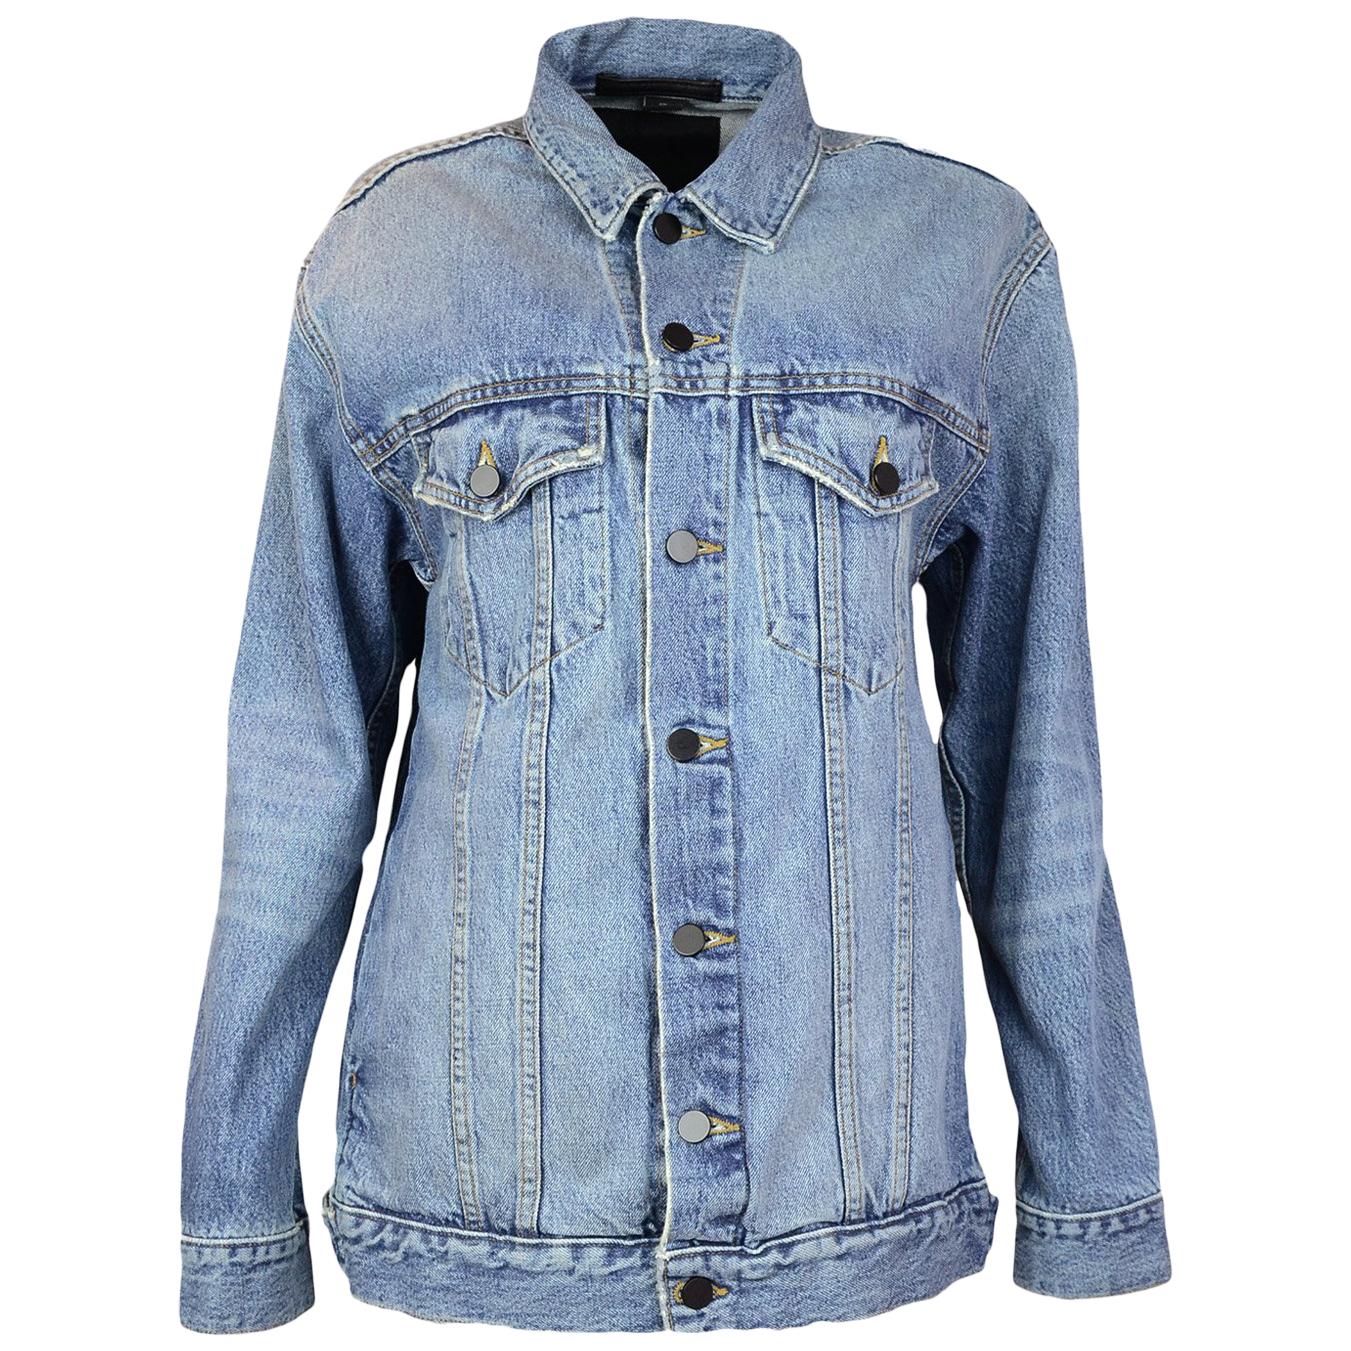 Alexander Wang Blue Daze Oversized Denim Jean Jacket sz S rt. $450